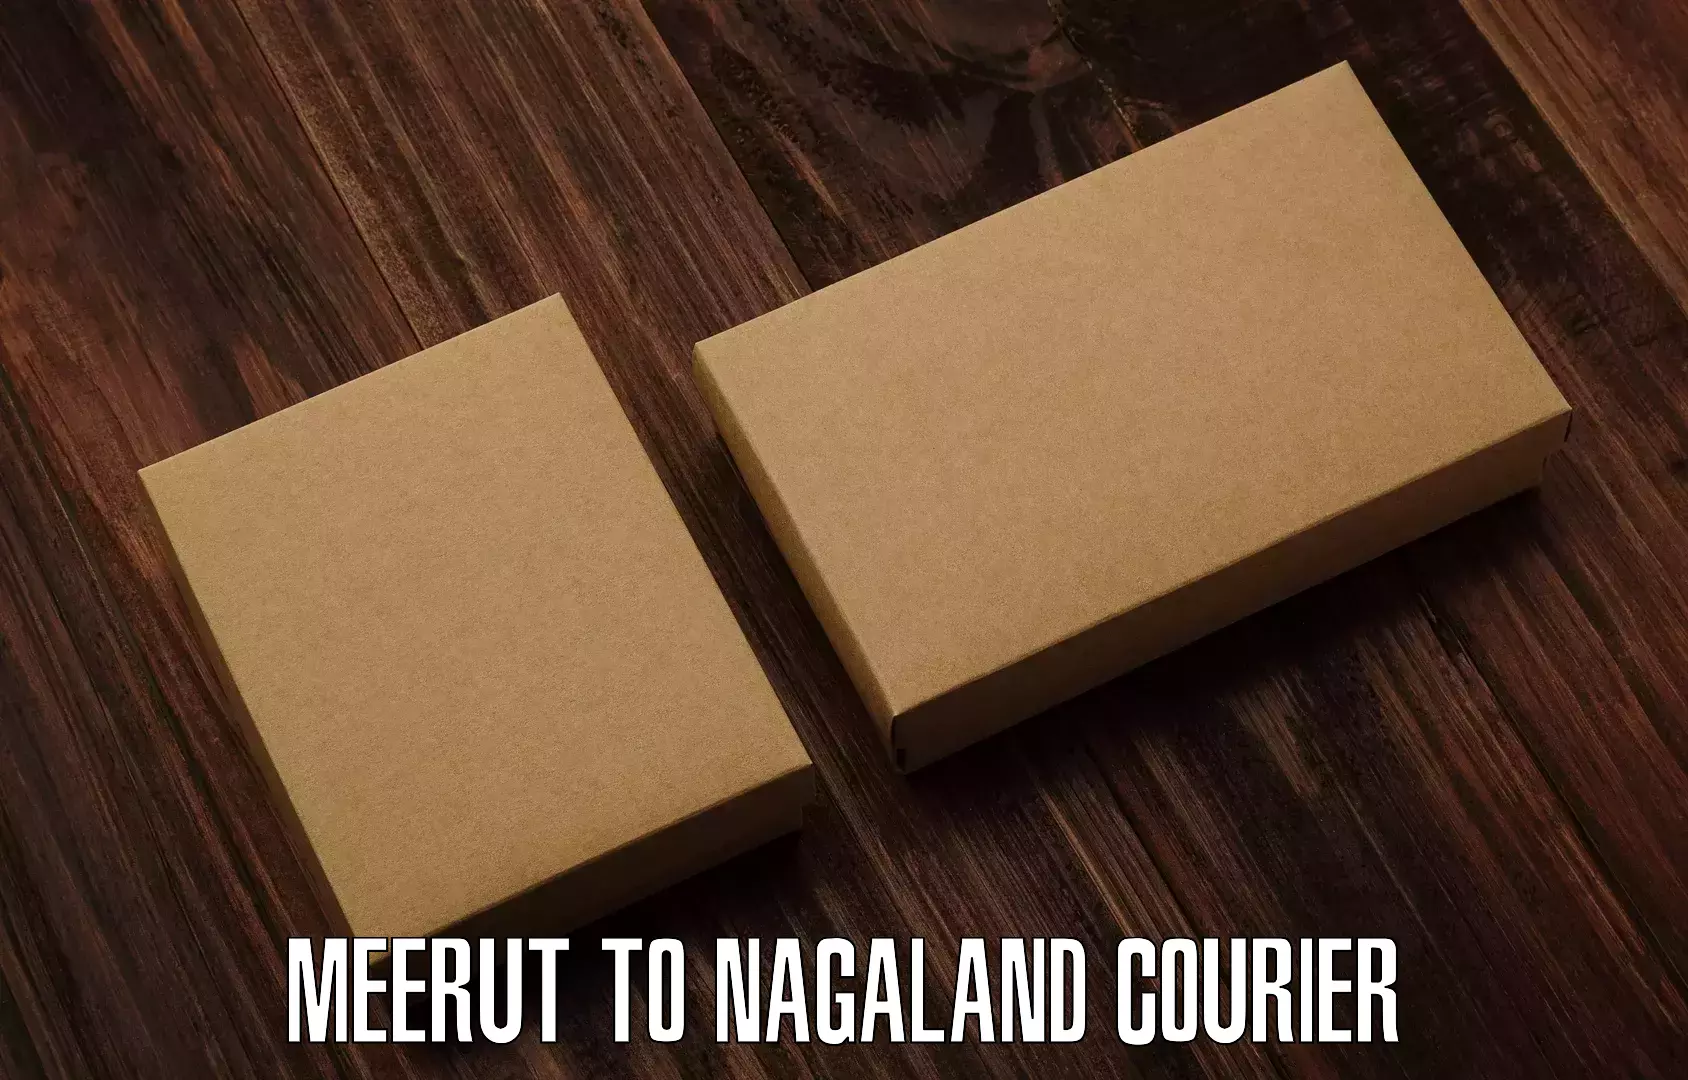 High-capacity parcel service Meerut to Nagaland